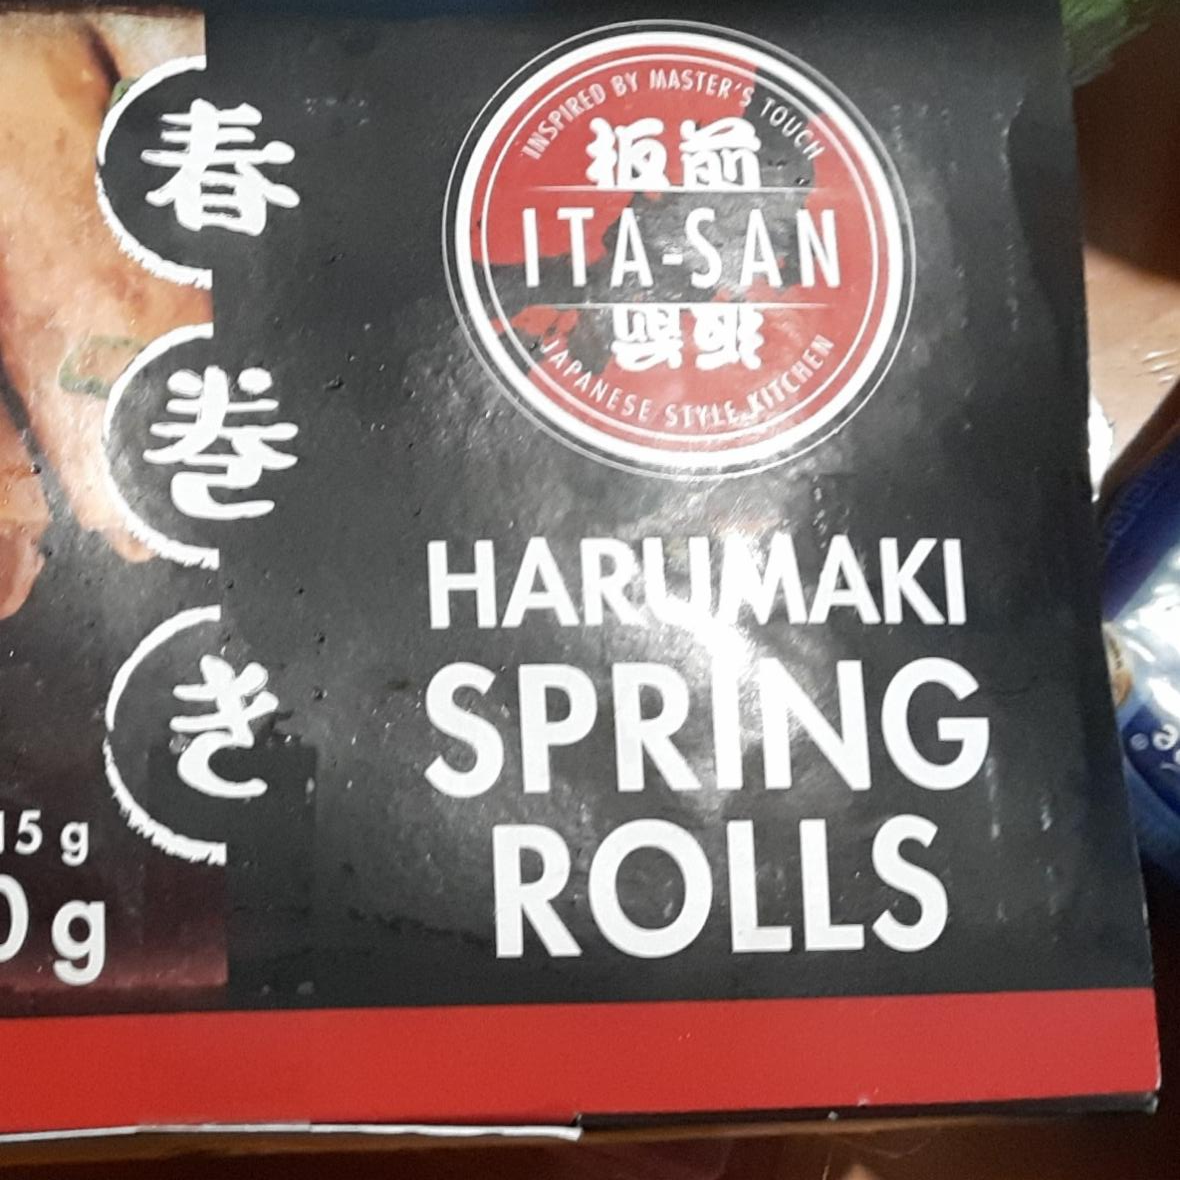 Fotografie - Harumaki spring rolls Ita-San